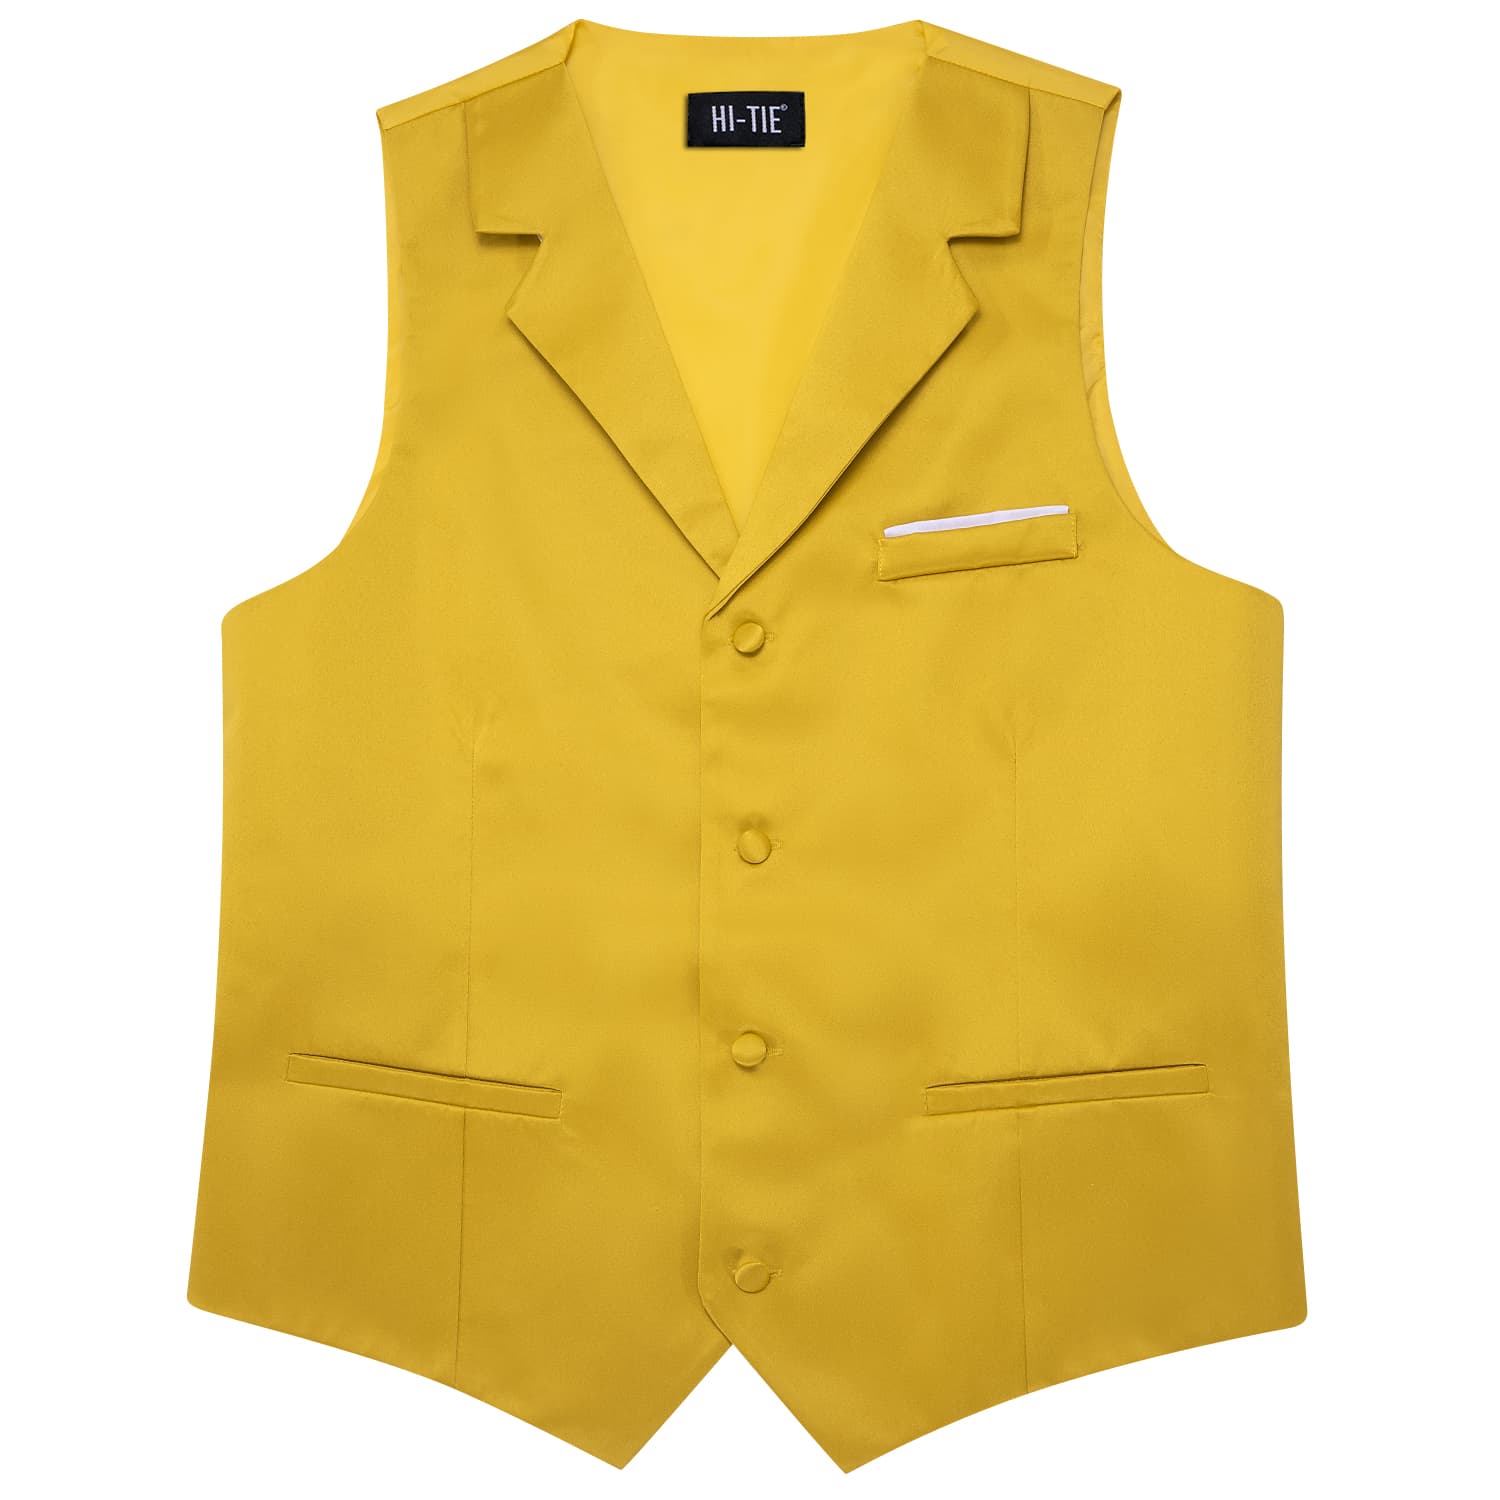 Hi-Tie Medallion Yellow Waistcoat Solid Notch lapels Men's Vest